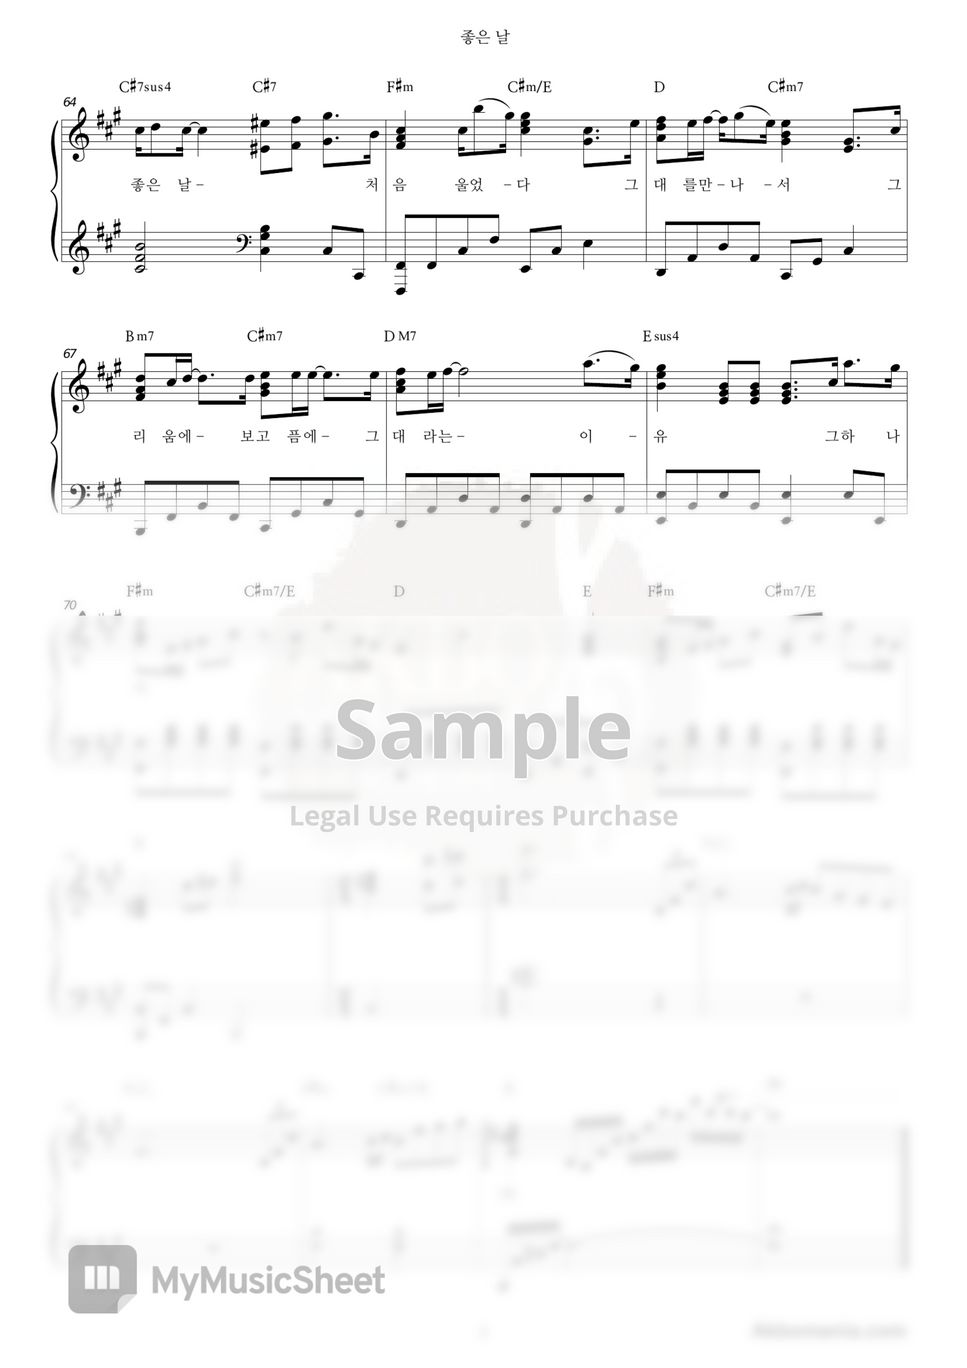 Good Day Sunshine [Jazz version] sheet music (real book with lyrics)